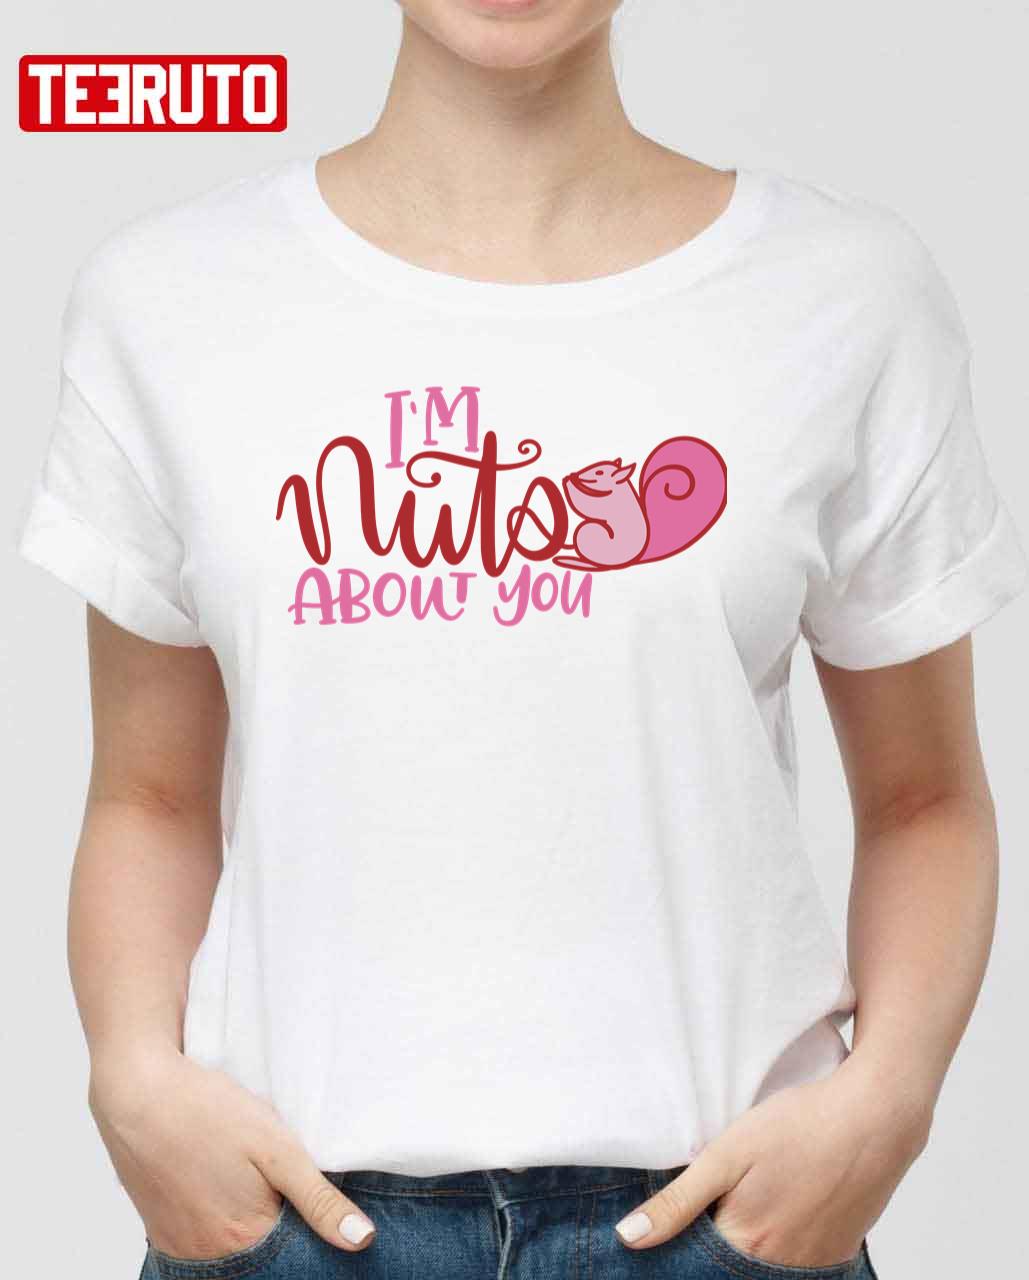 I’m Nuts About You Valentine Day Unisex Sweatshirt